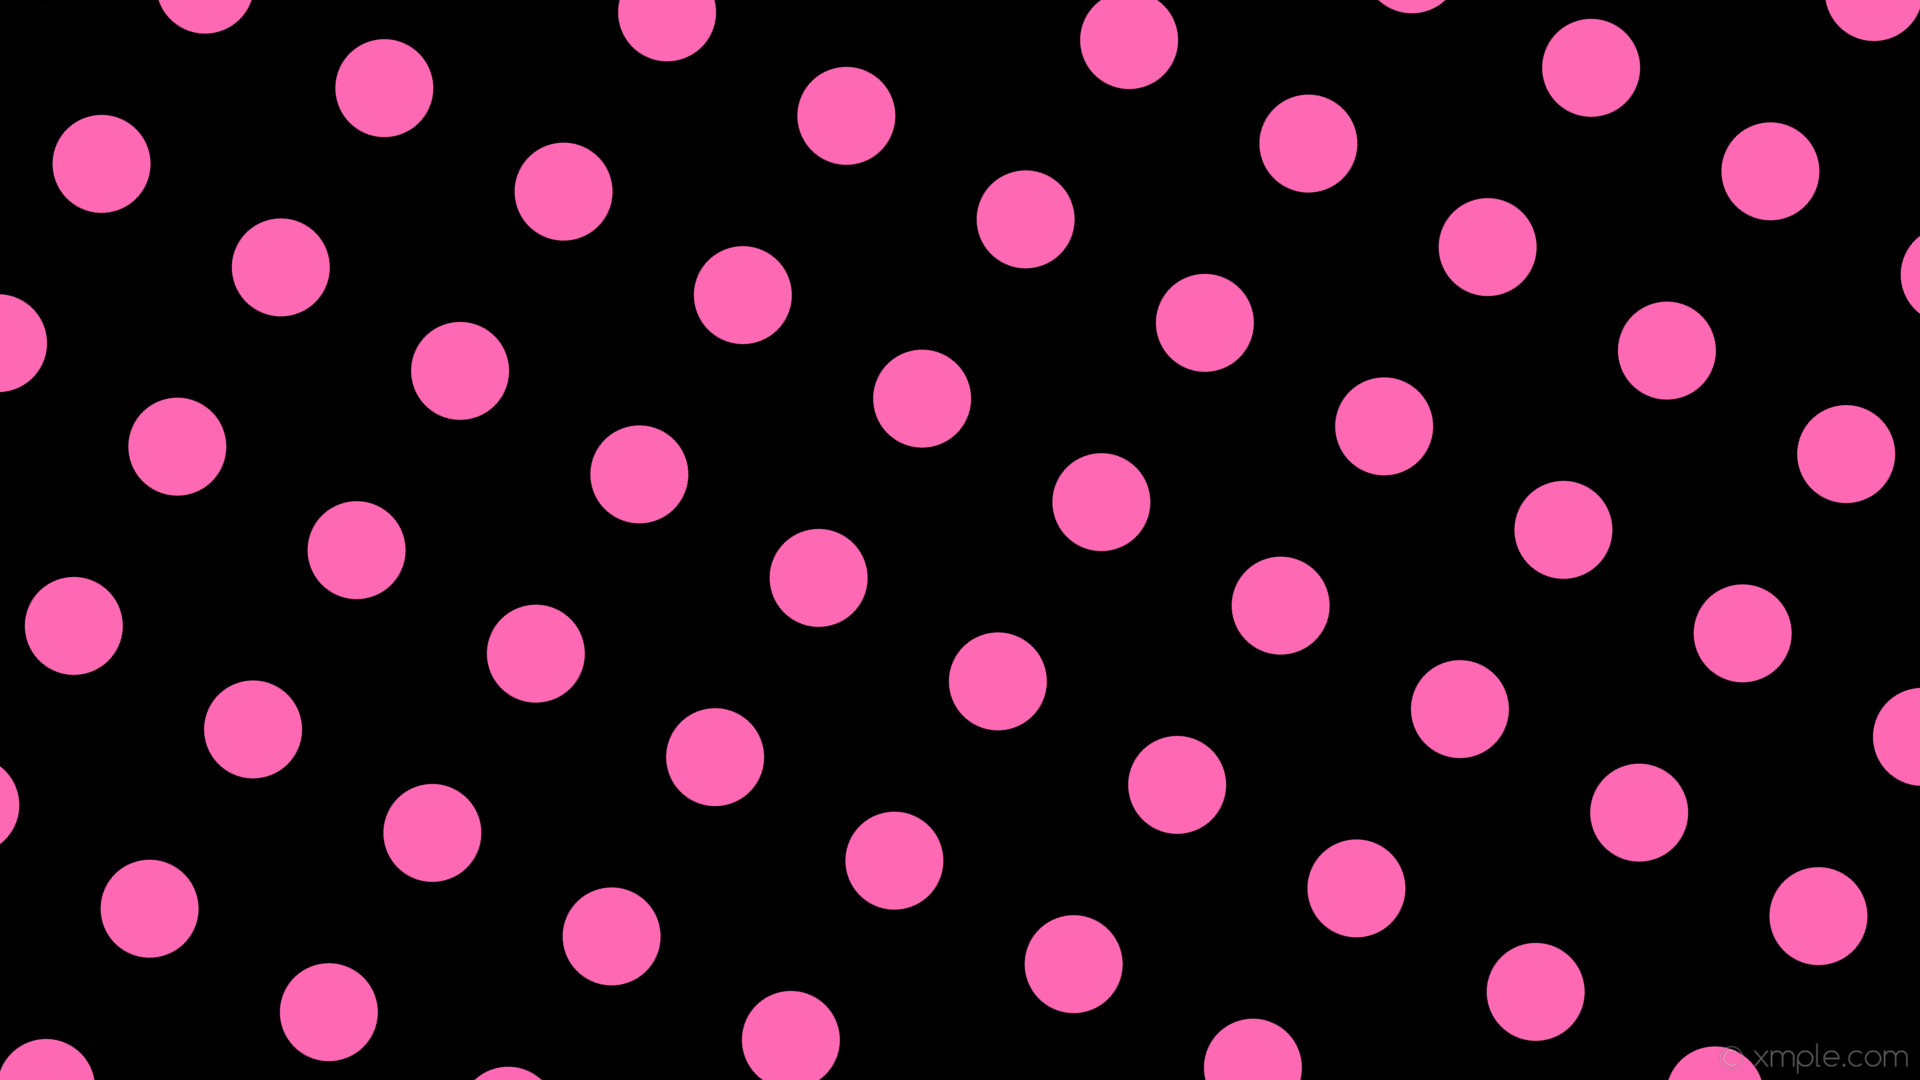 1920x1080 wallpaper pink black spots polka dots hot pink #000000 #ff69b4 240Â° 98px  207px